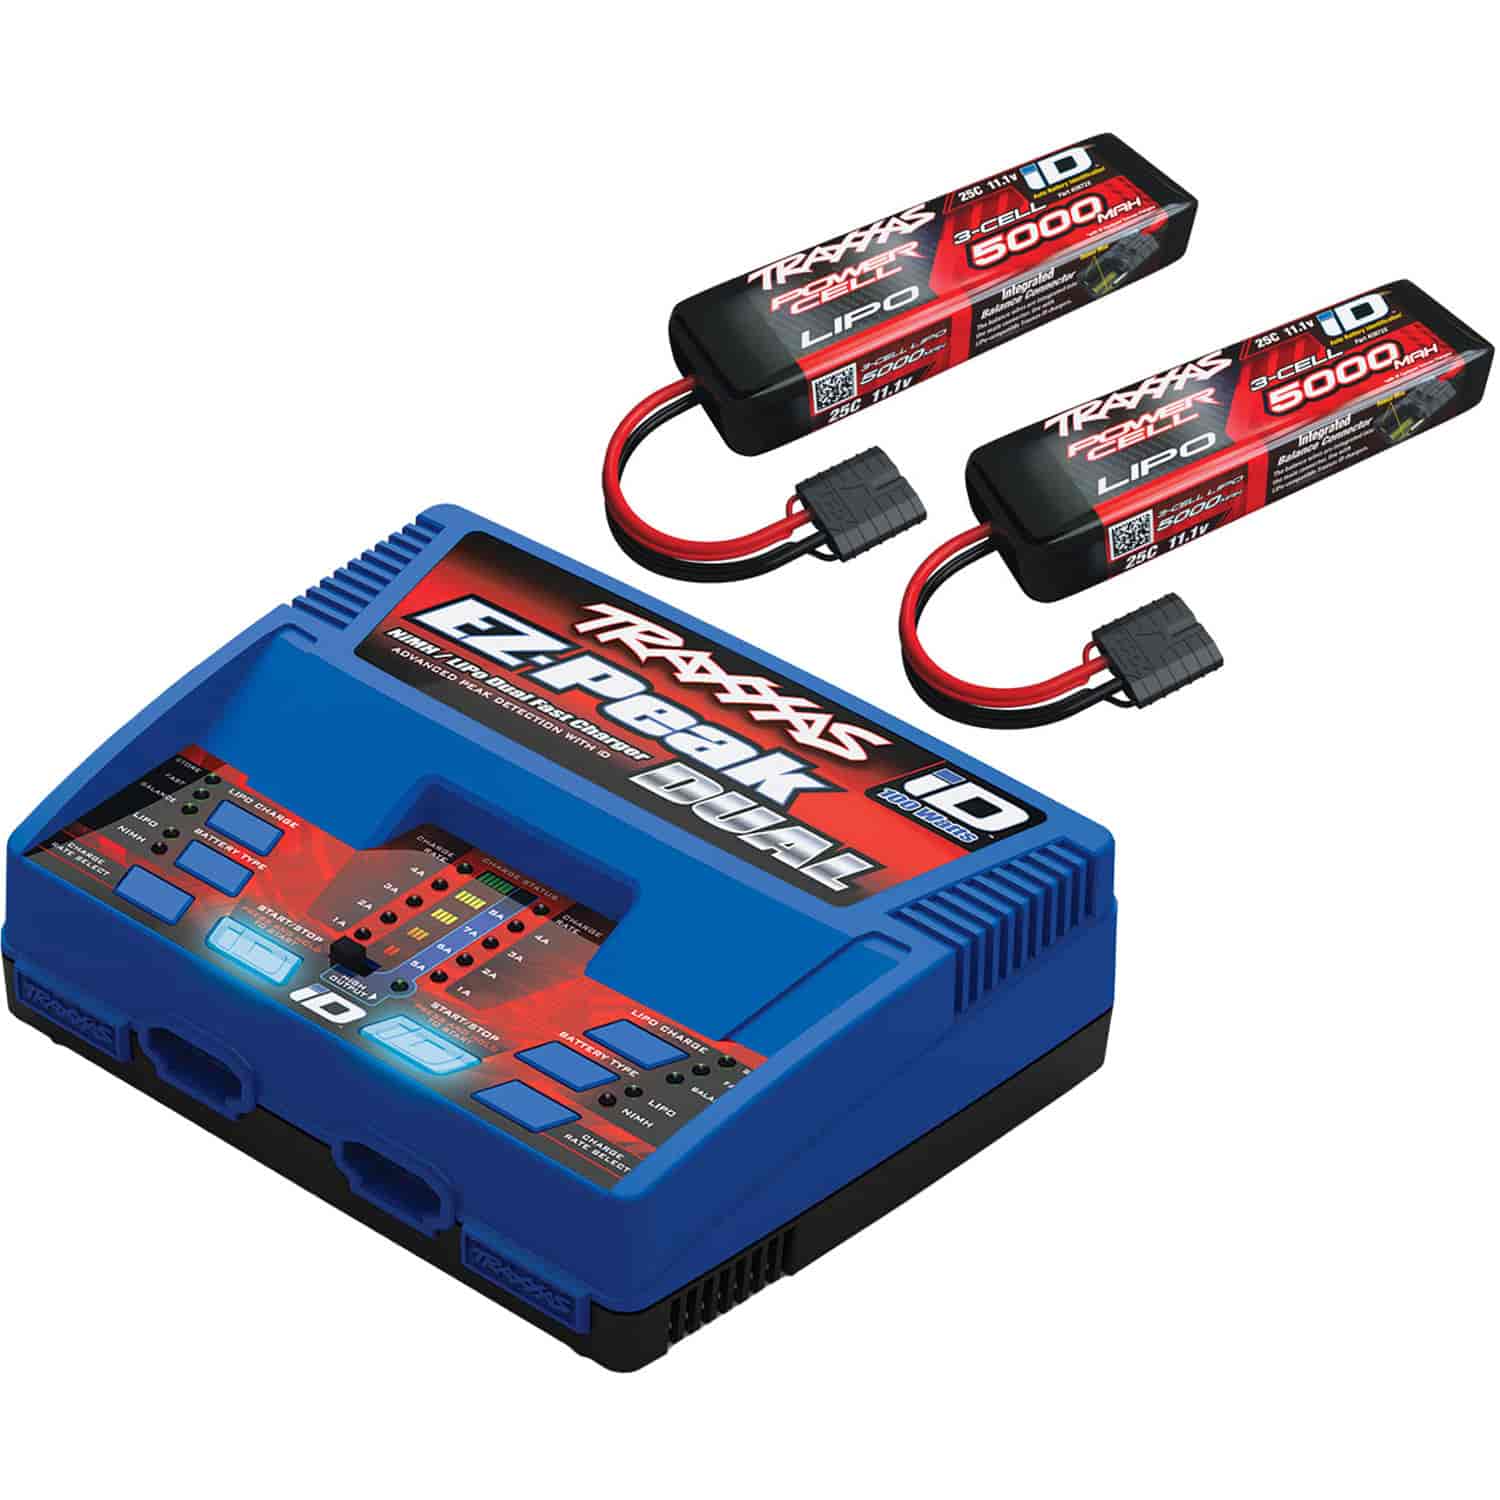 Charger & Battery Kit Kit Includes: 2- 5000mAh 11.1v 3-Cell 25C LiPo Battery